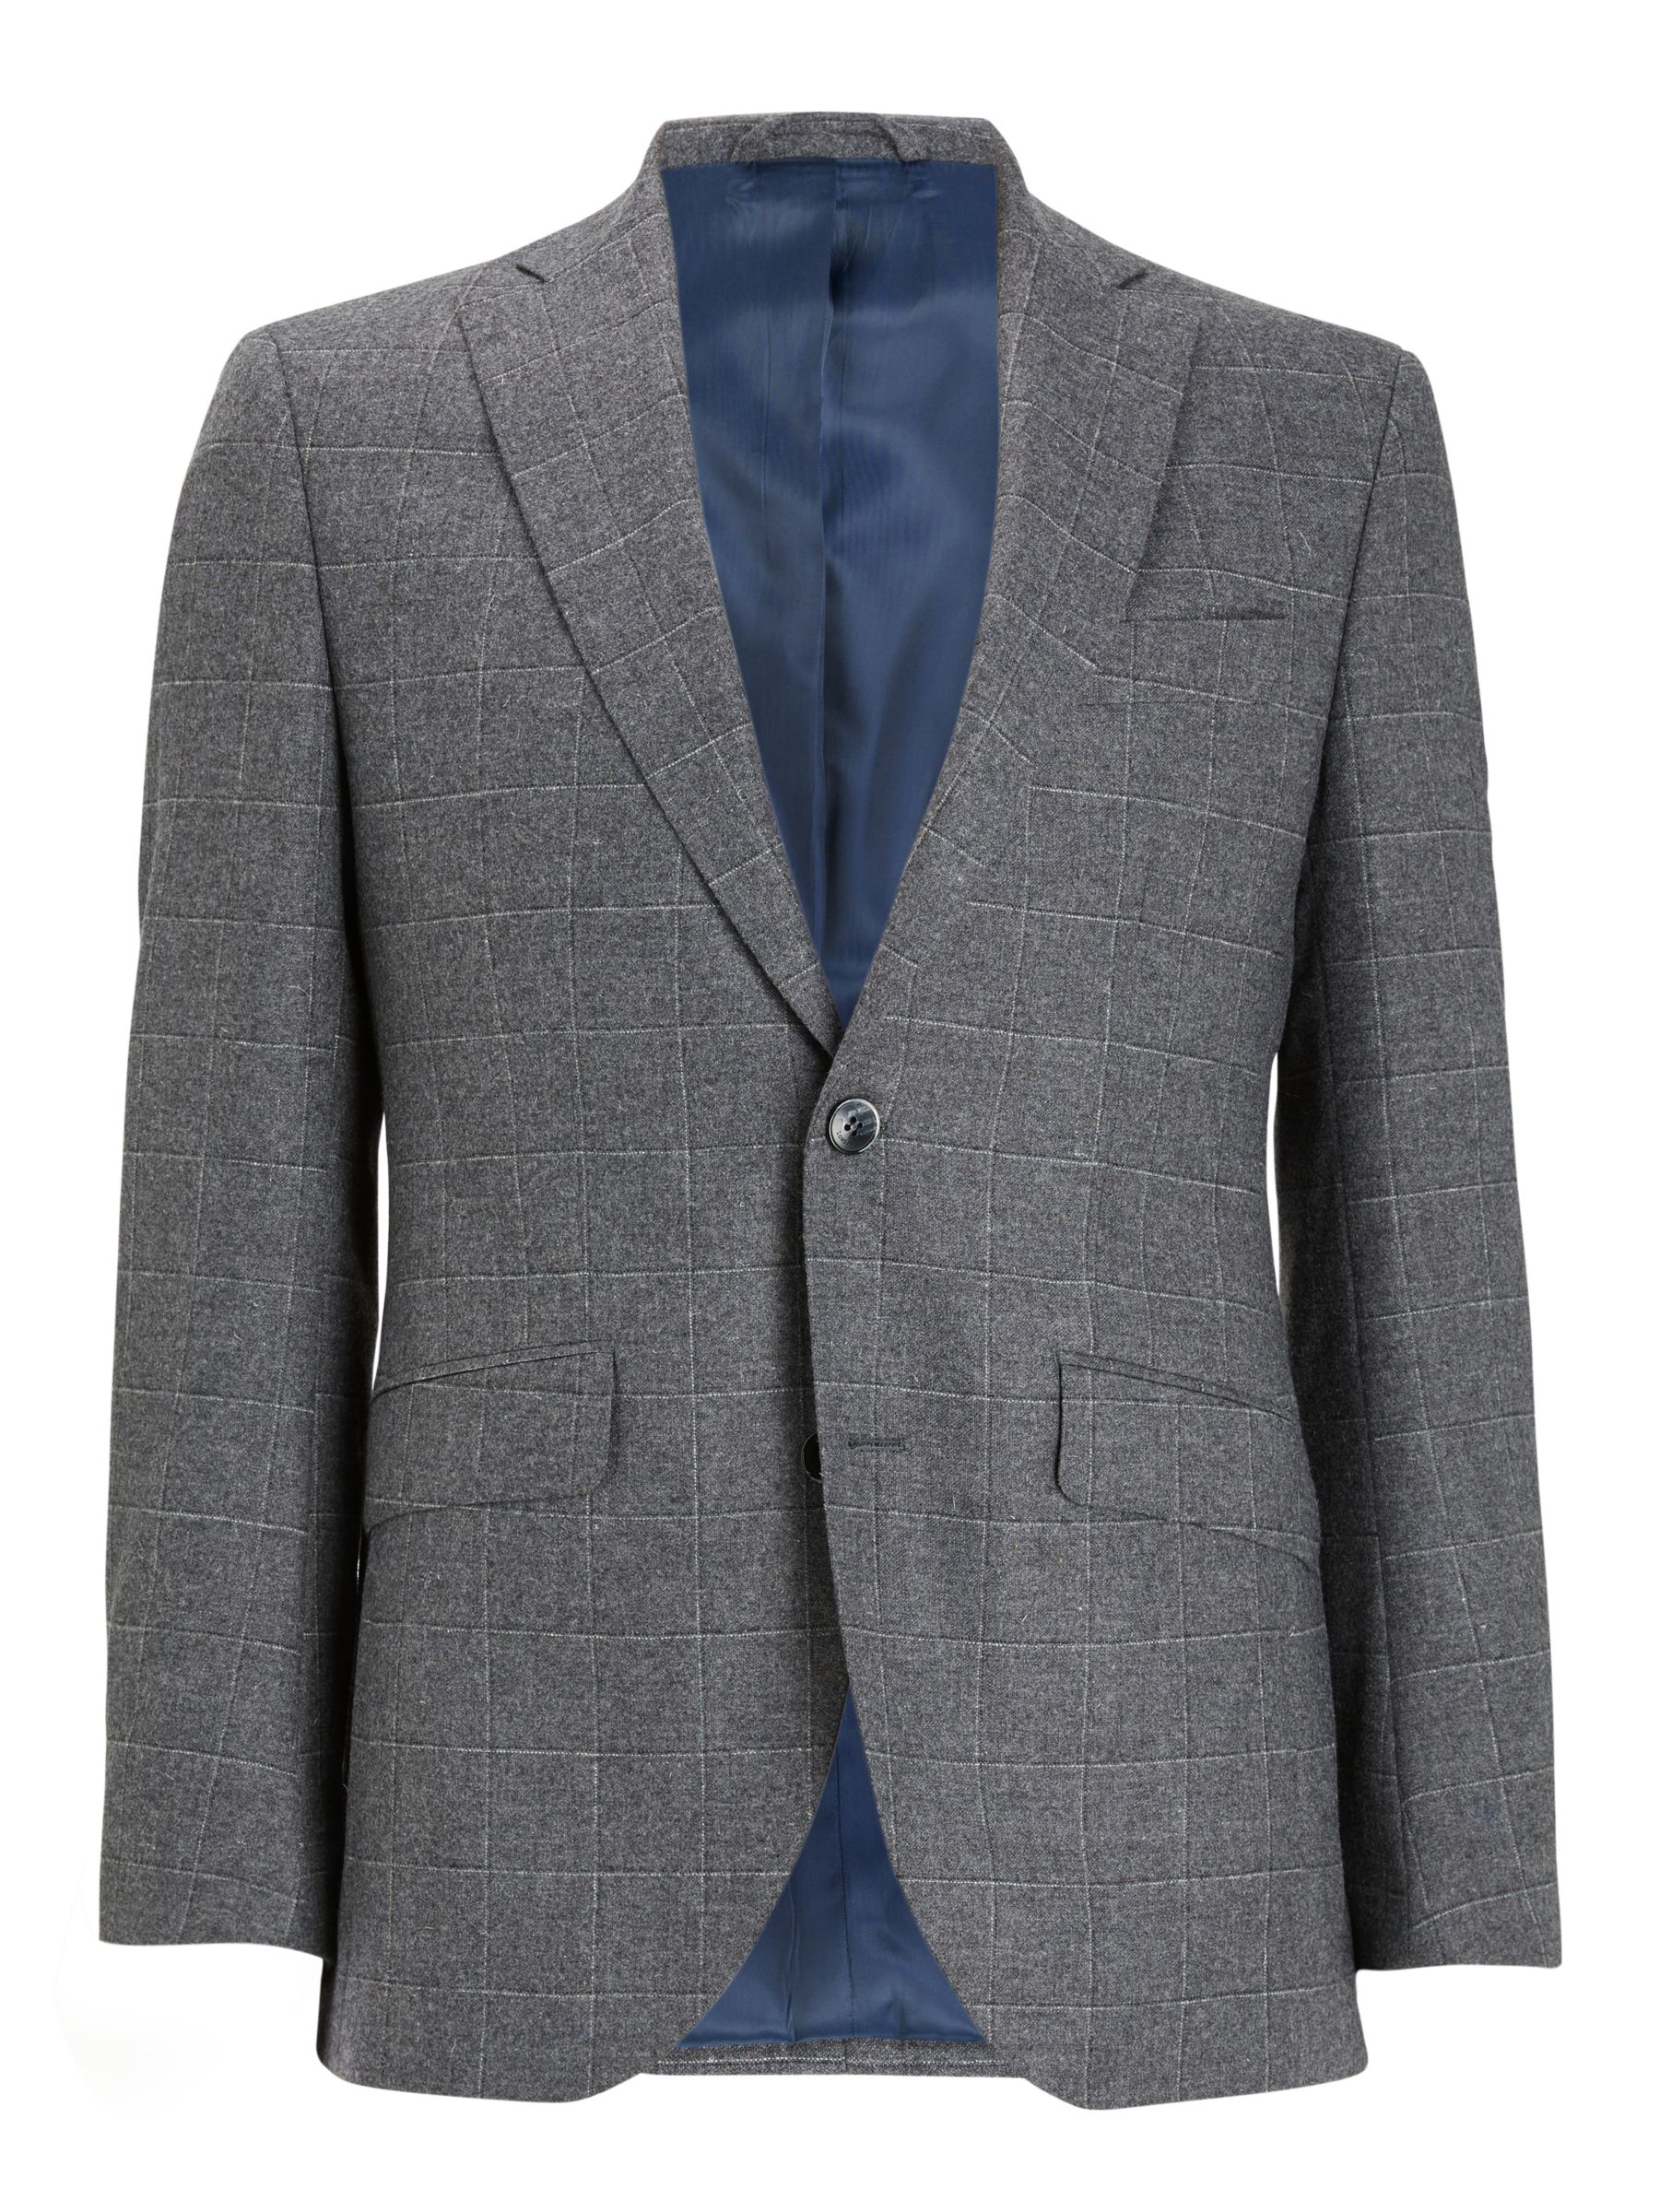 Hackett London Windowpane Check Tailored Suit Jacket, Grey at John ...